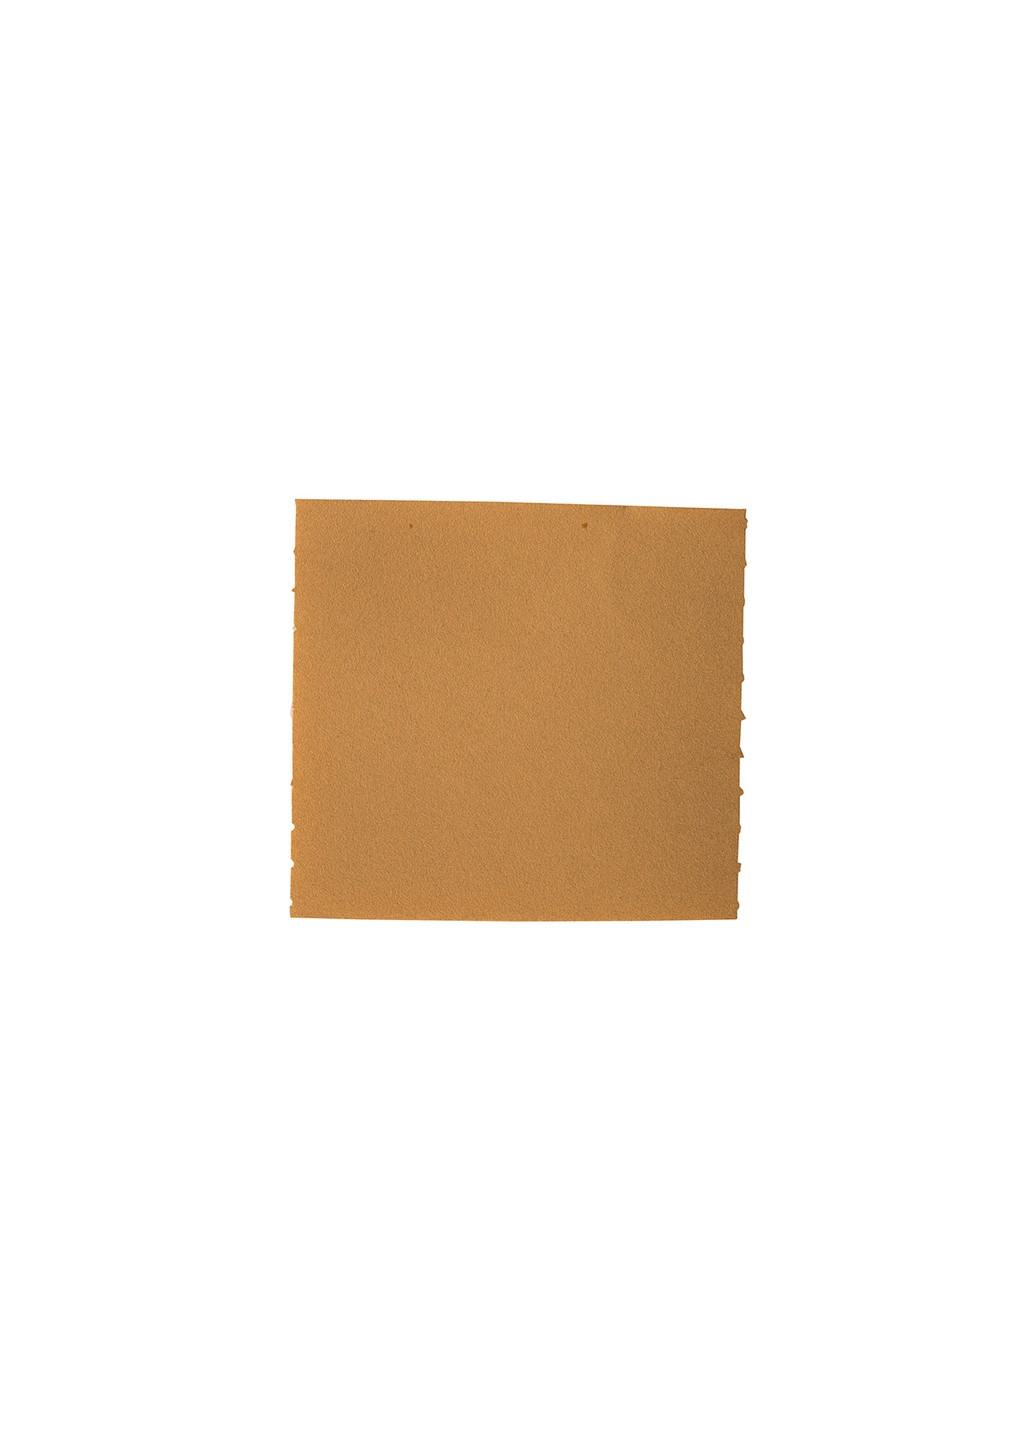 Шлифлист бумажный SoftFlex (115х125 мм, P240) наждачная шлифбумага на поролоне (21400) Mirka (286423414)